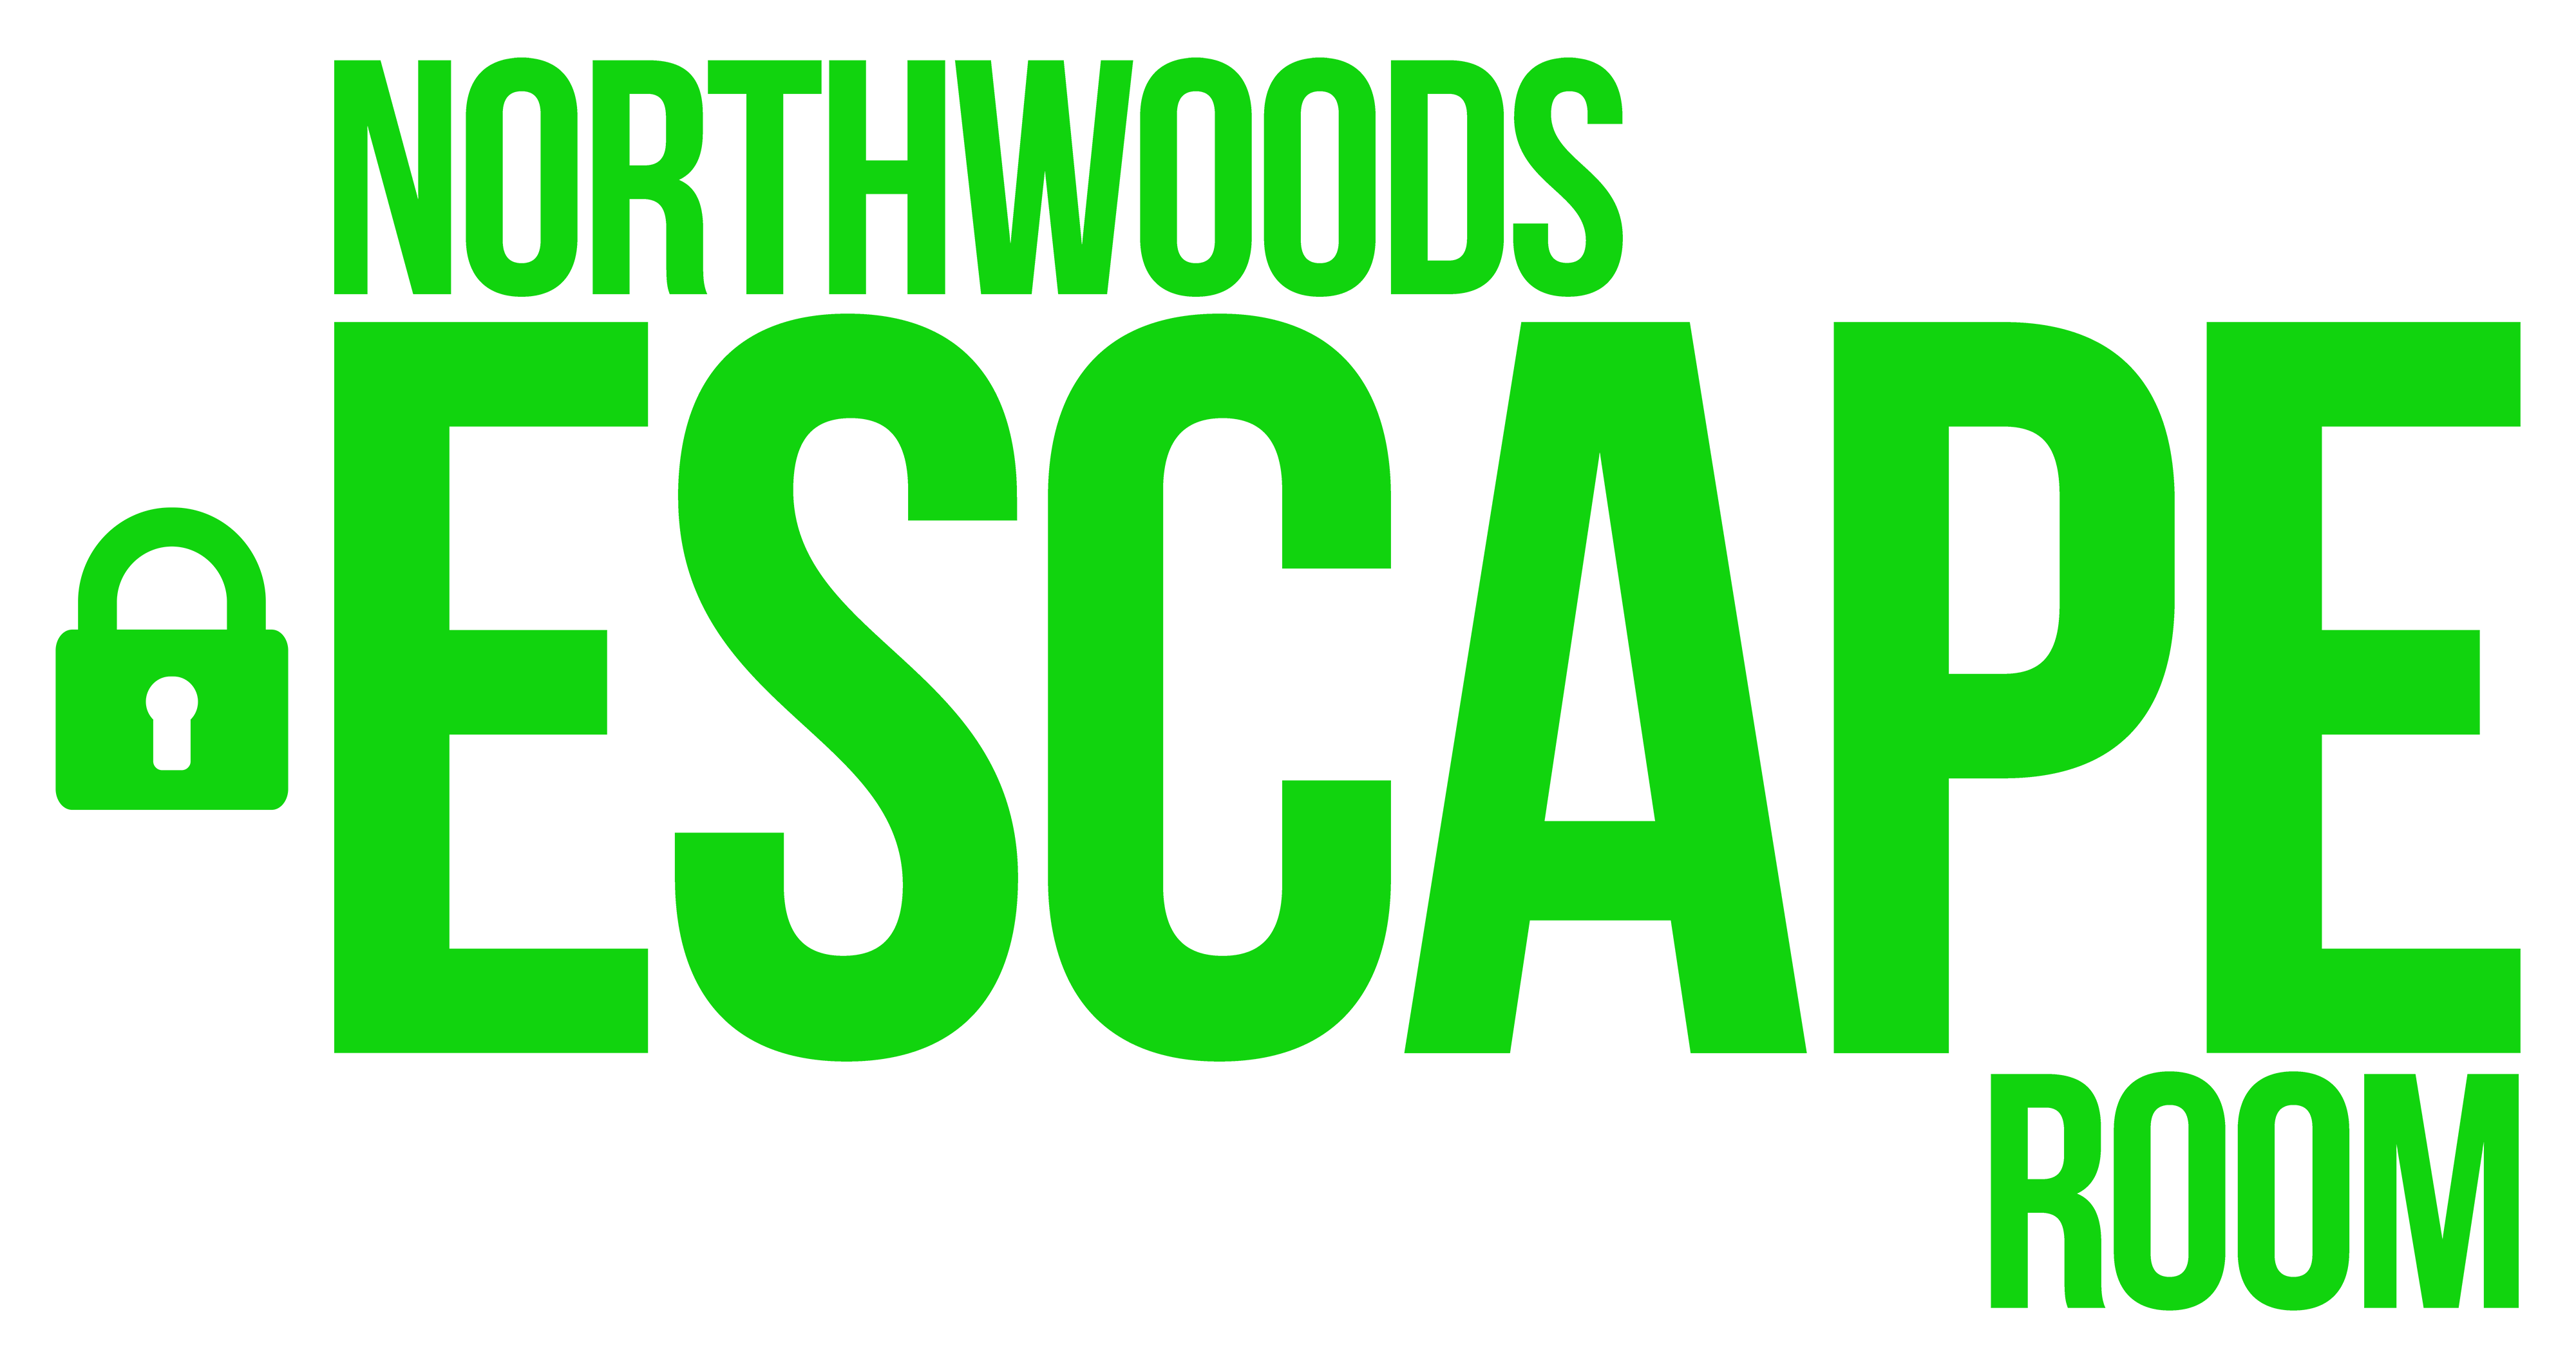 Northwoods Escape Room